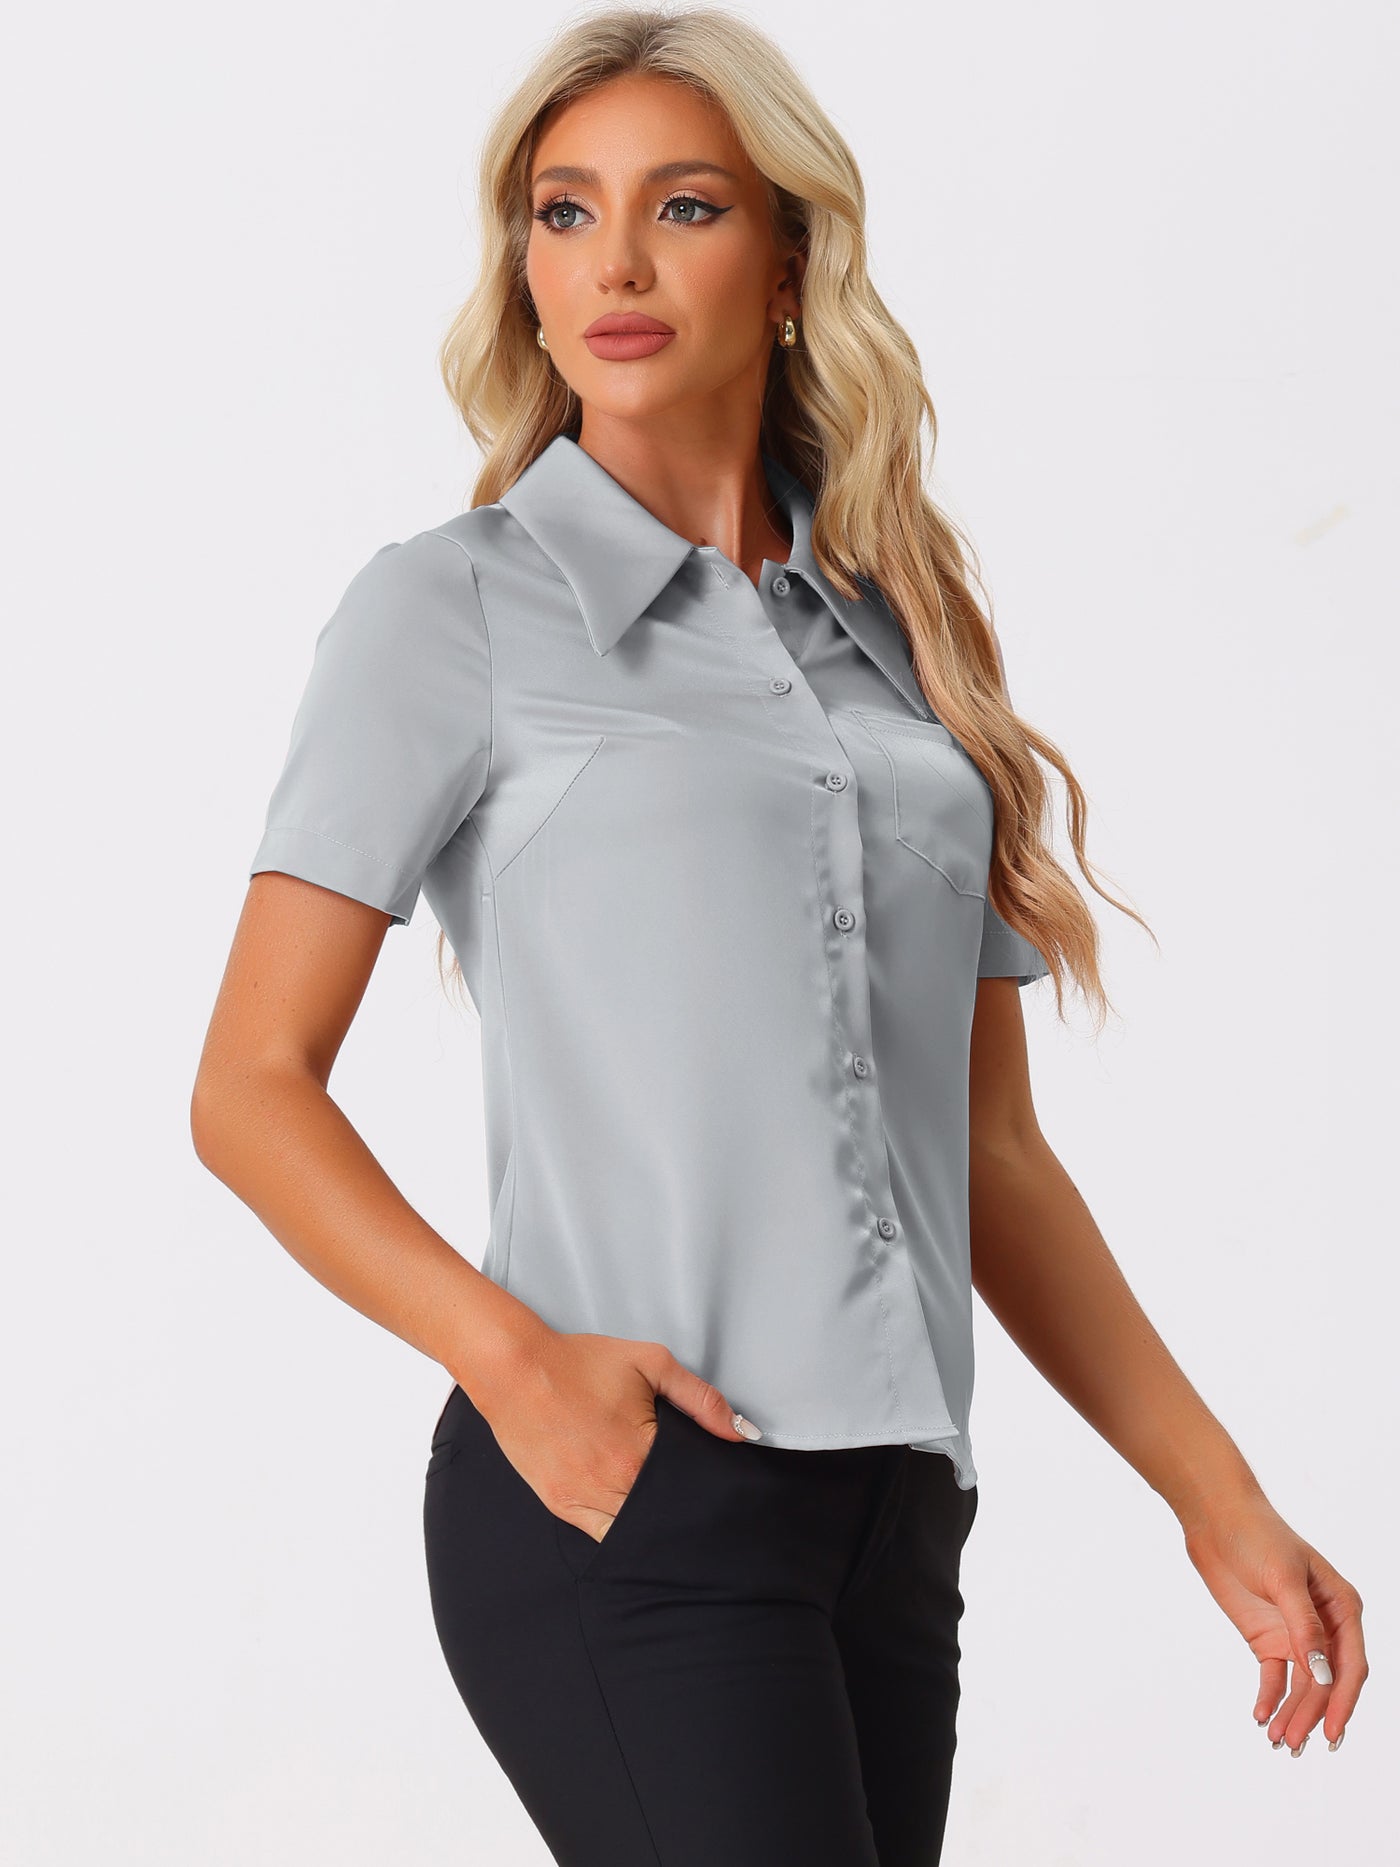 Allegra K Elegant Collar Short Sleeve Work Office Button Down Satin Blouse Shirt